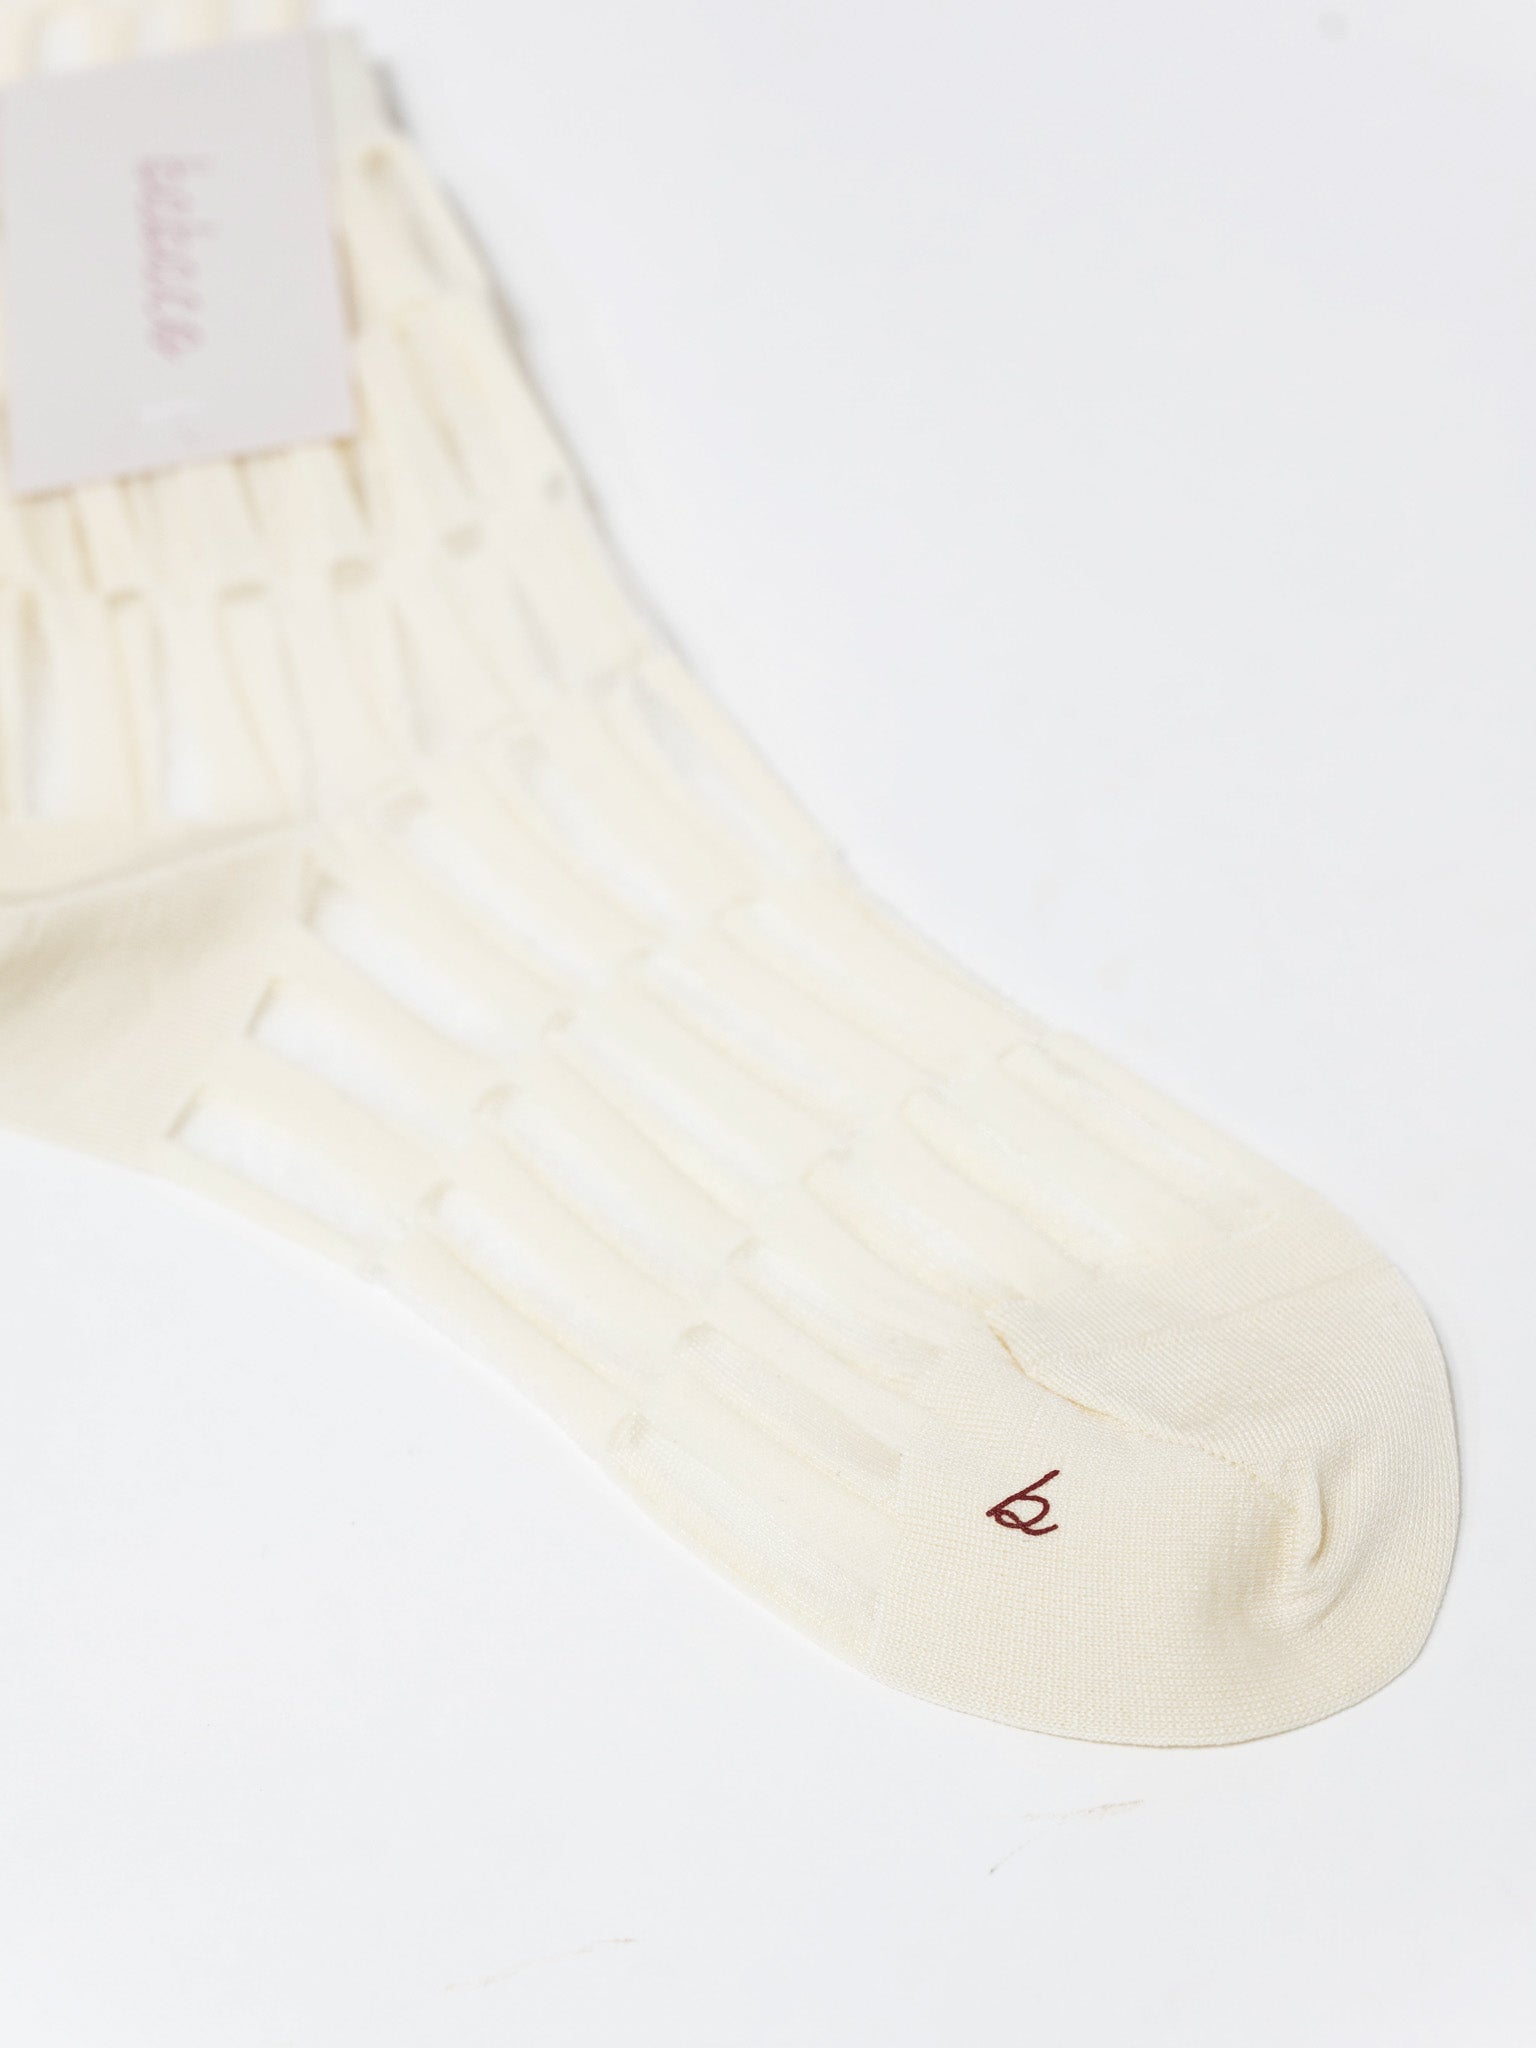 Namu Shop - Babaco Transparent Stripe Socks - Ivory, Lavender